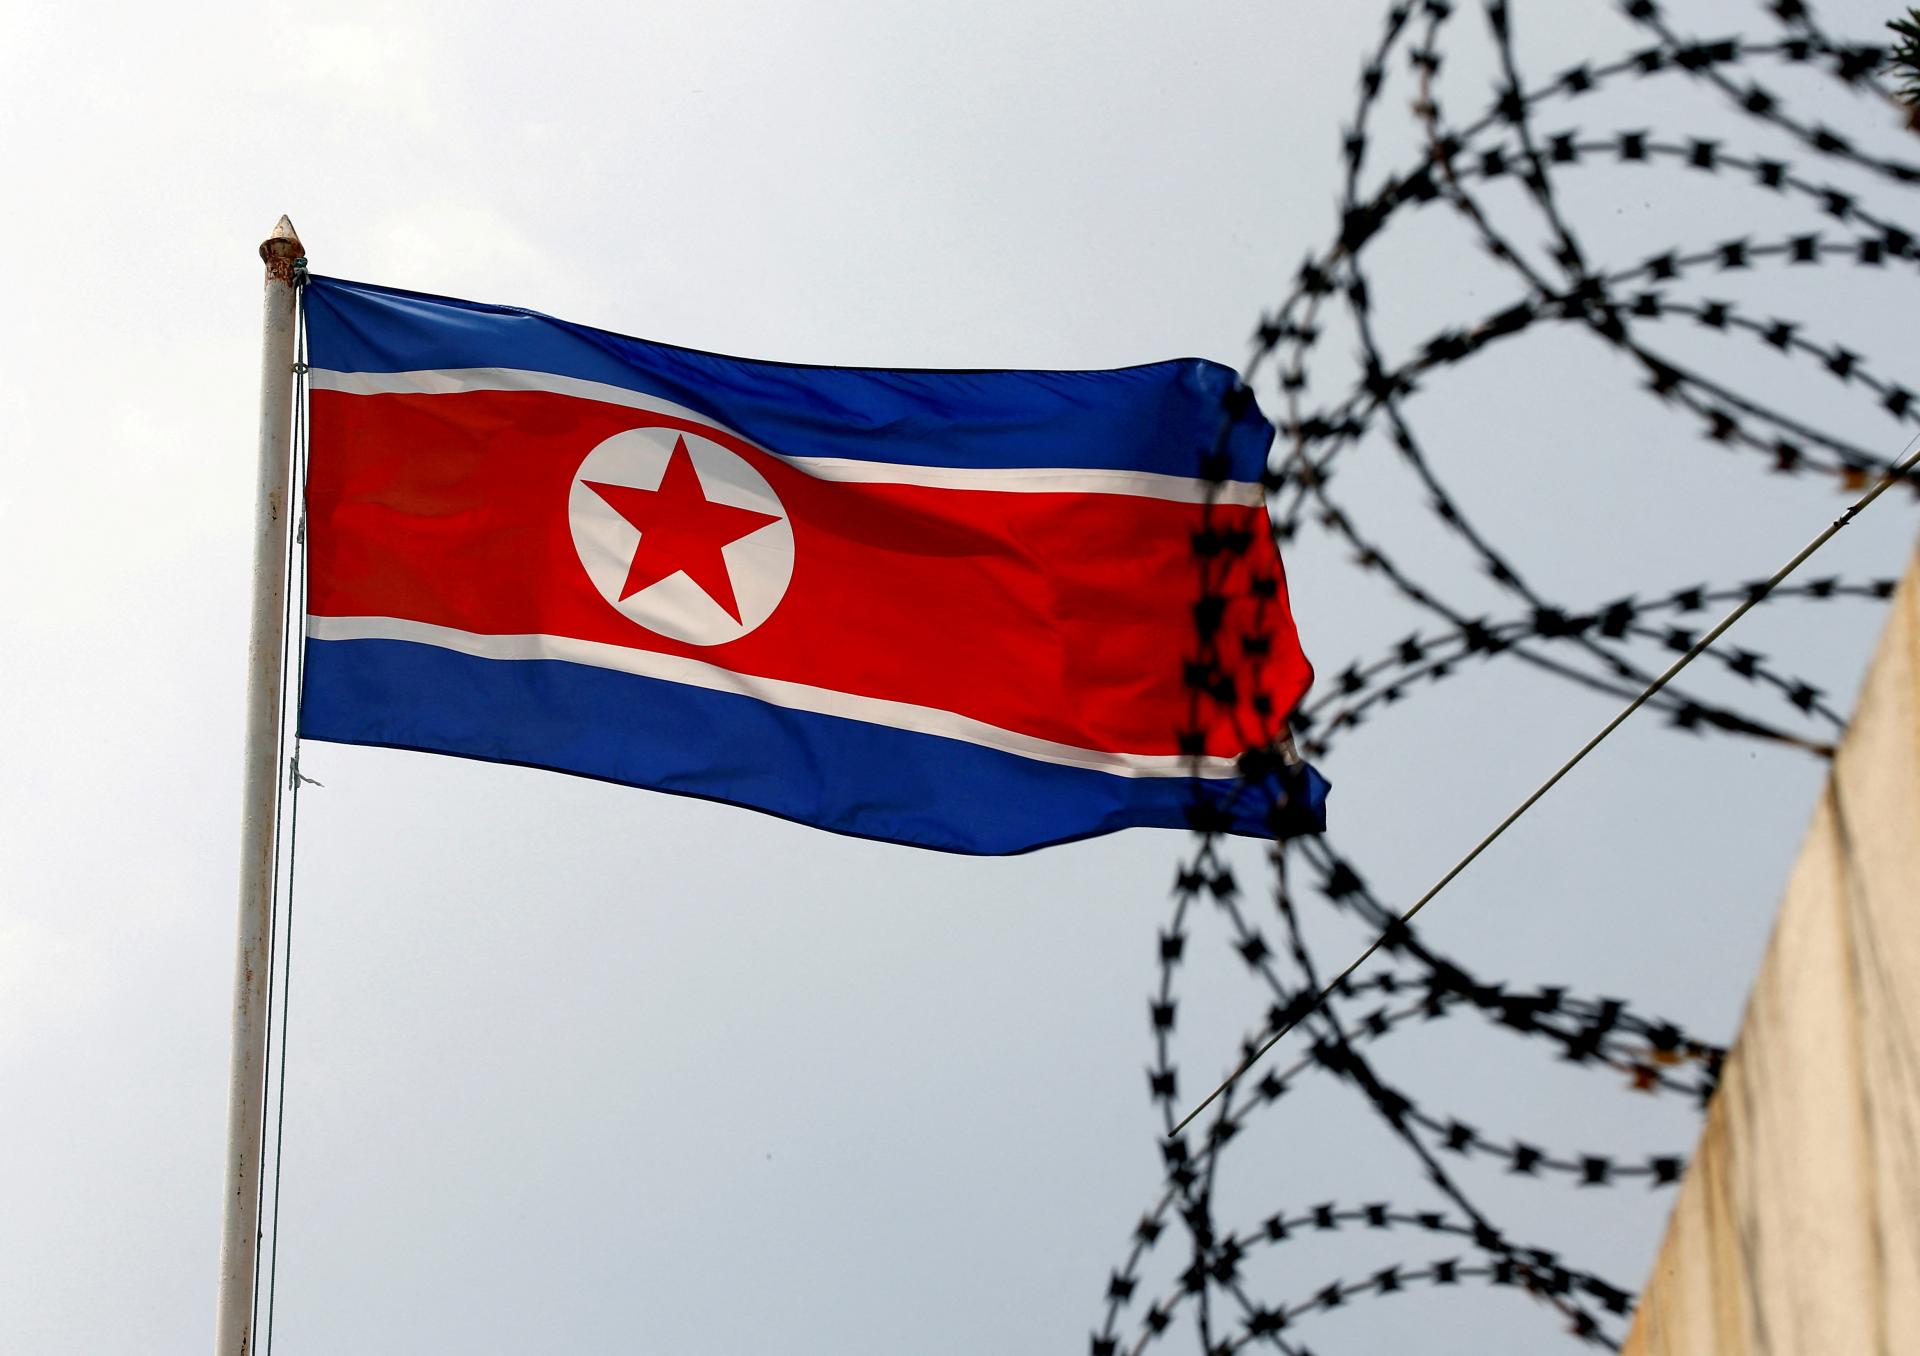 Severná Kórea popravuje ľudí kvôli drogám či náboženstvu, hovorí nová správa Soulu